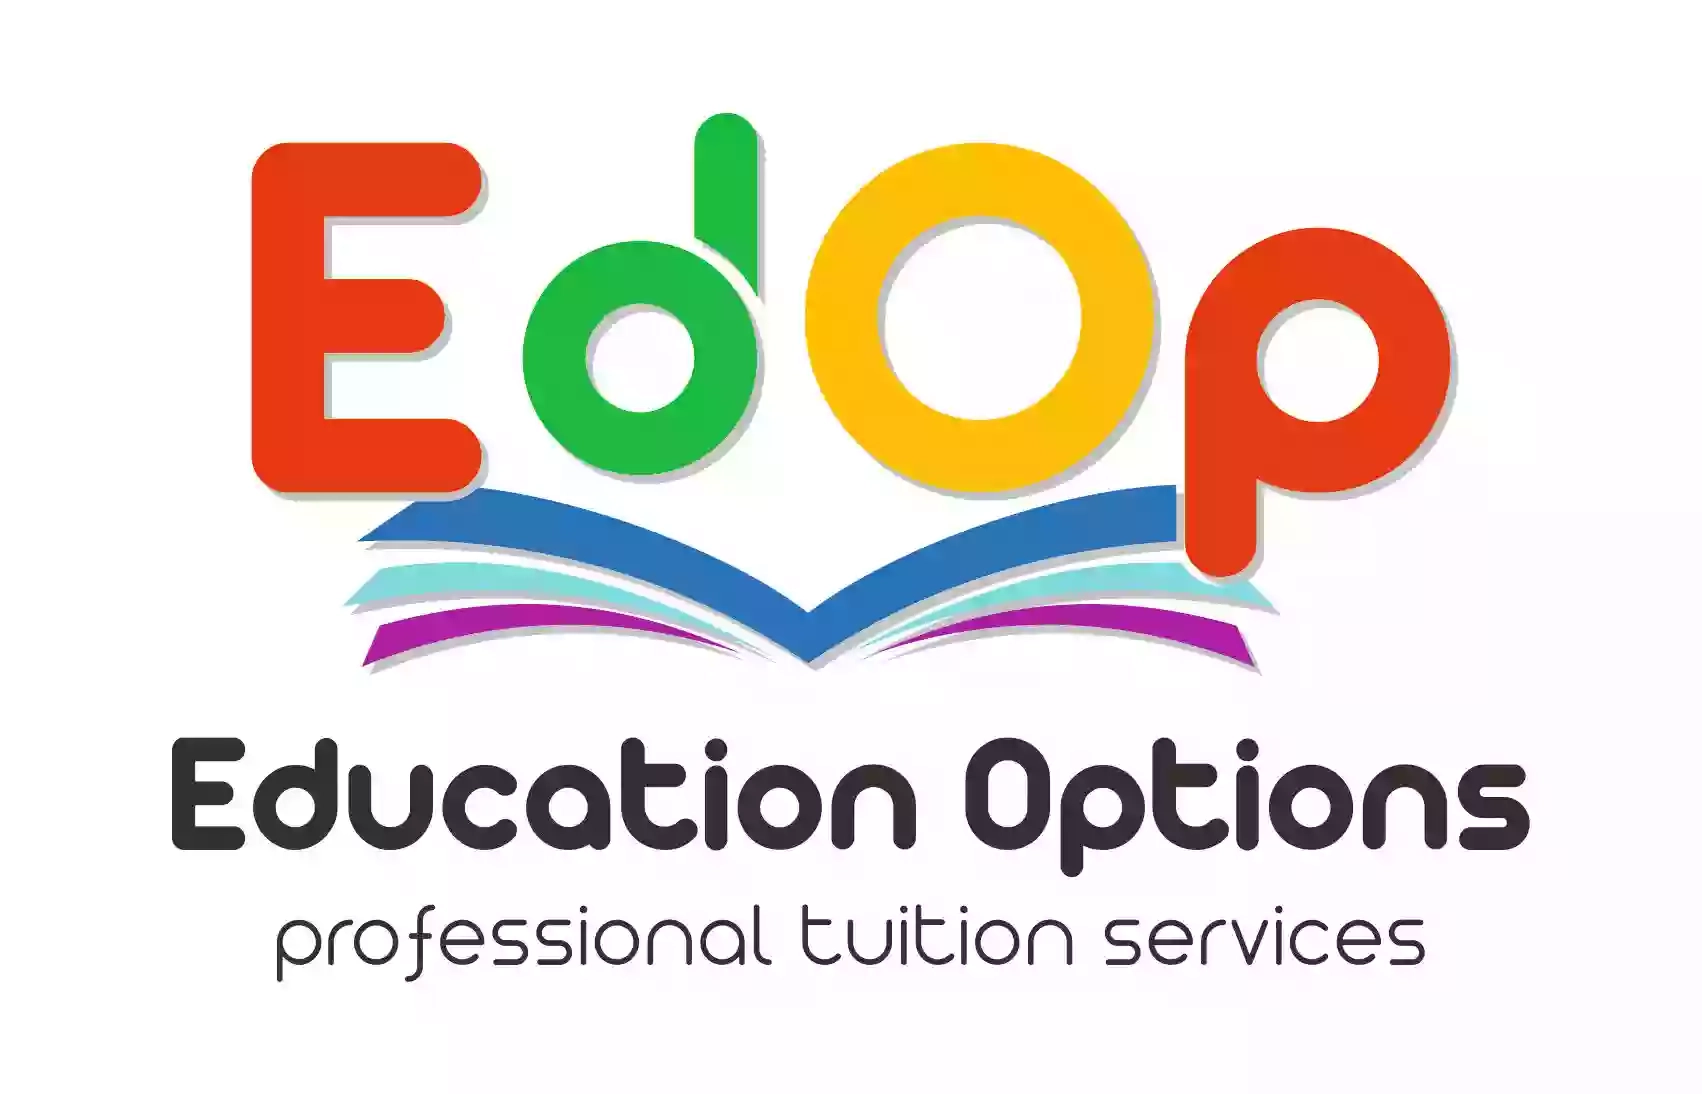 Education Options 11plus - The best 11+ education